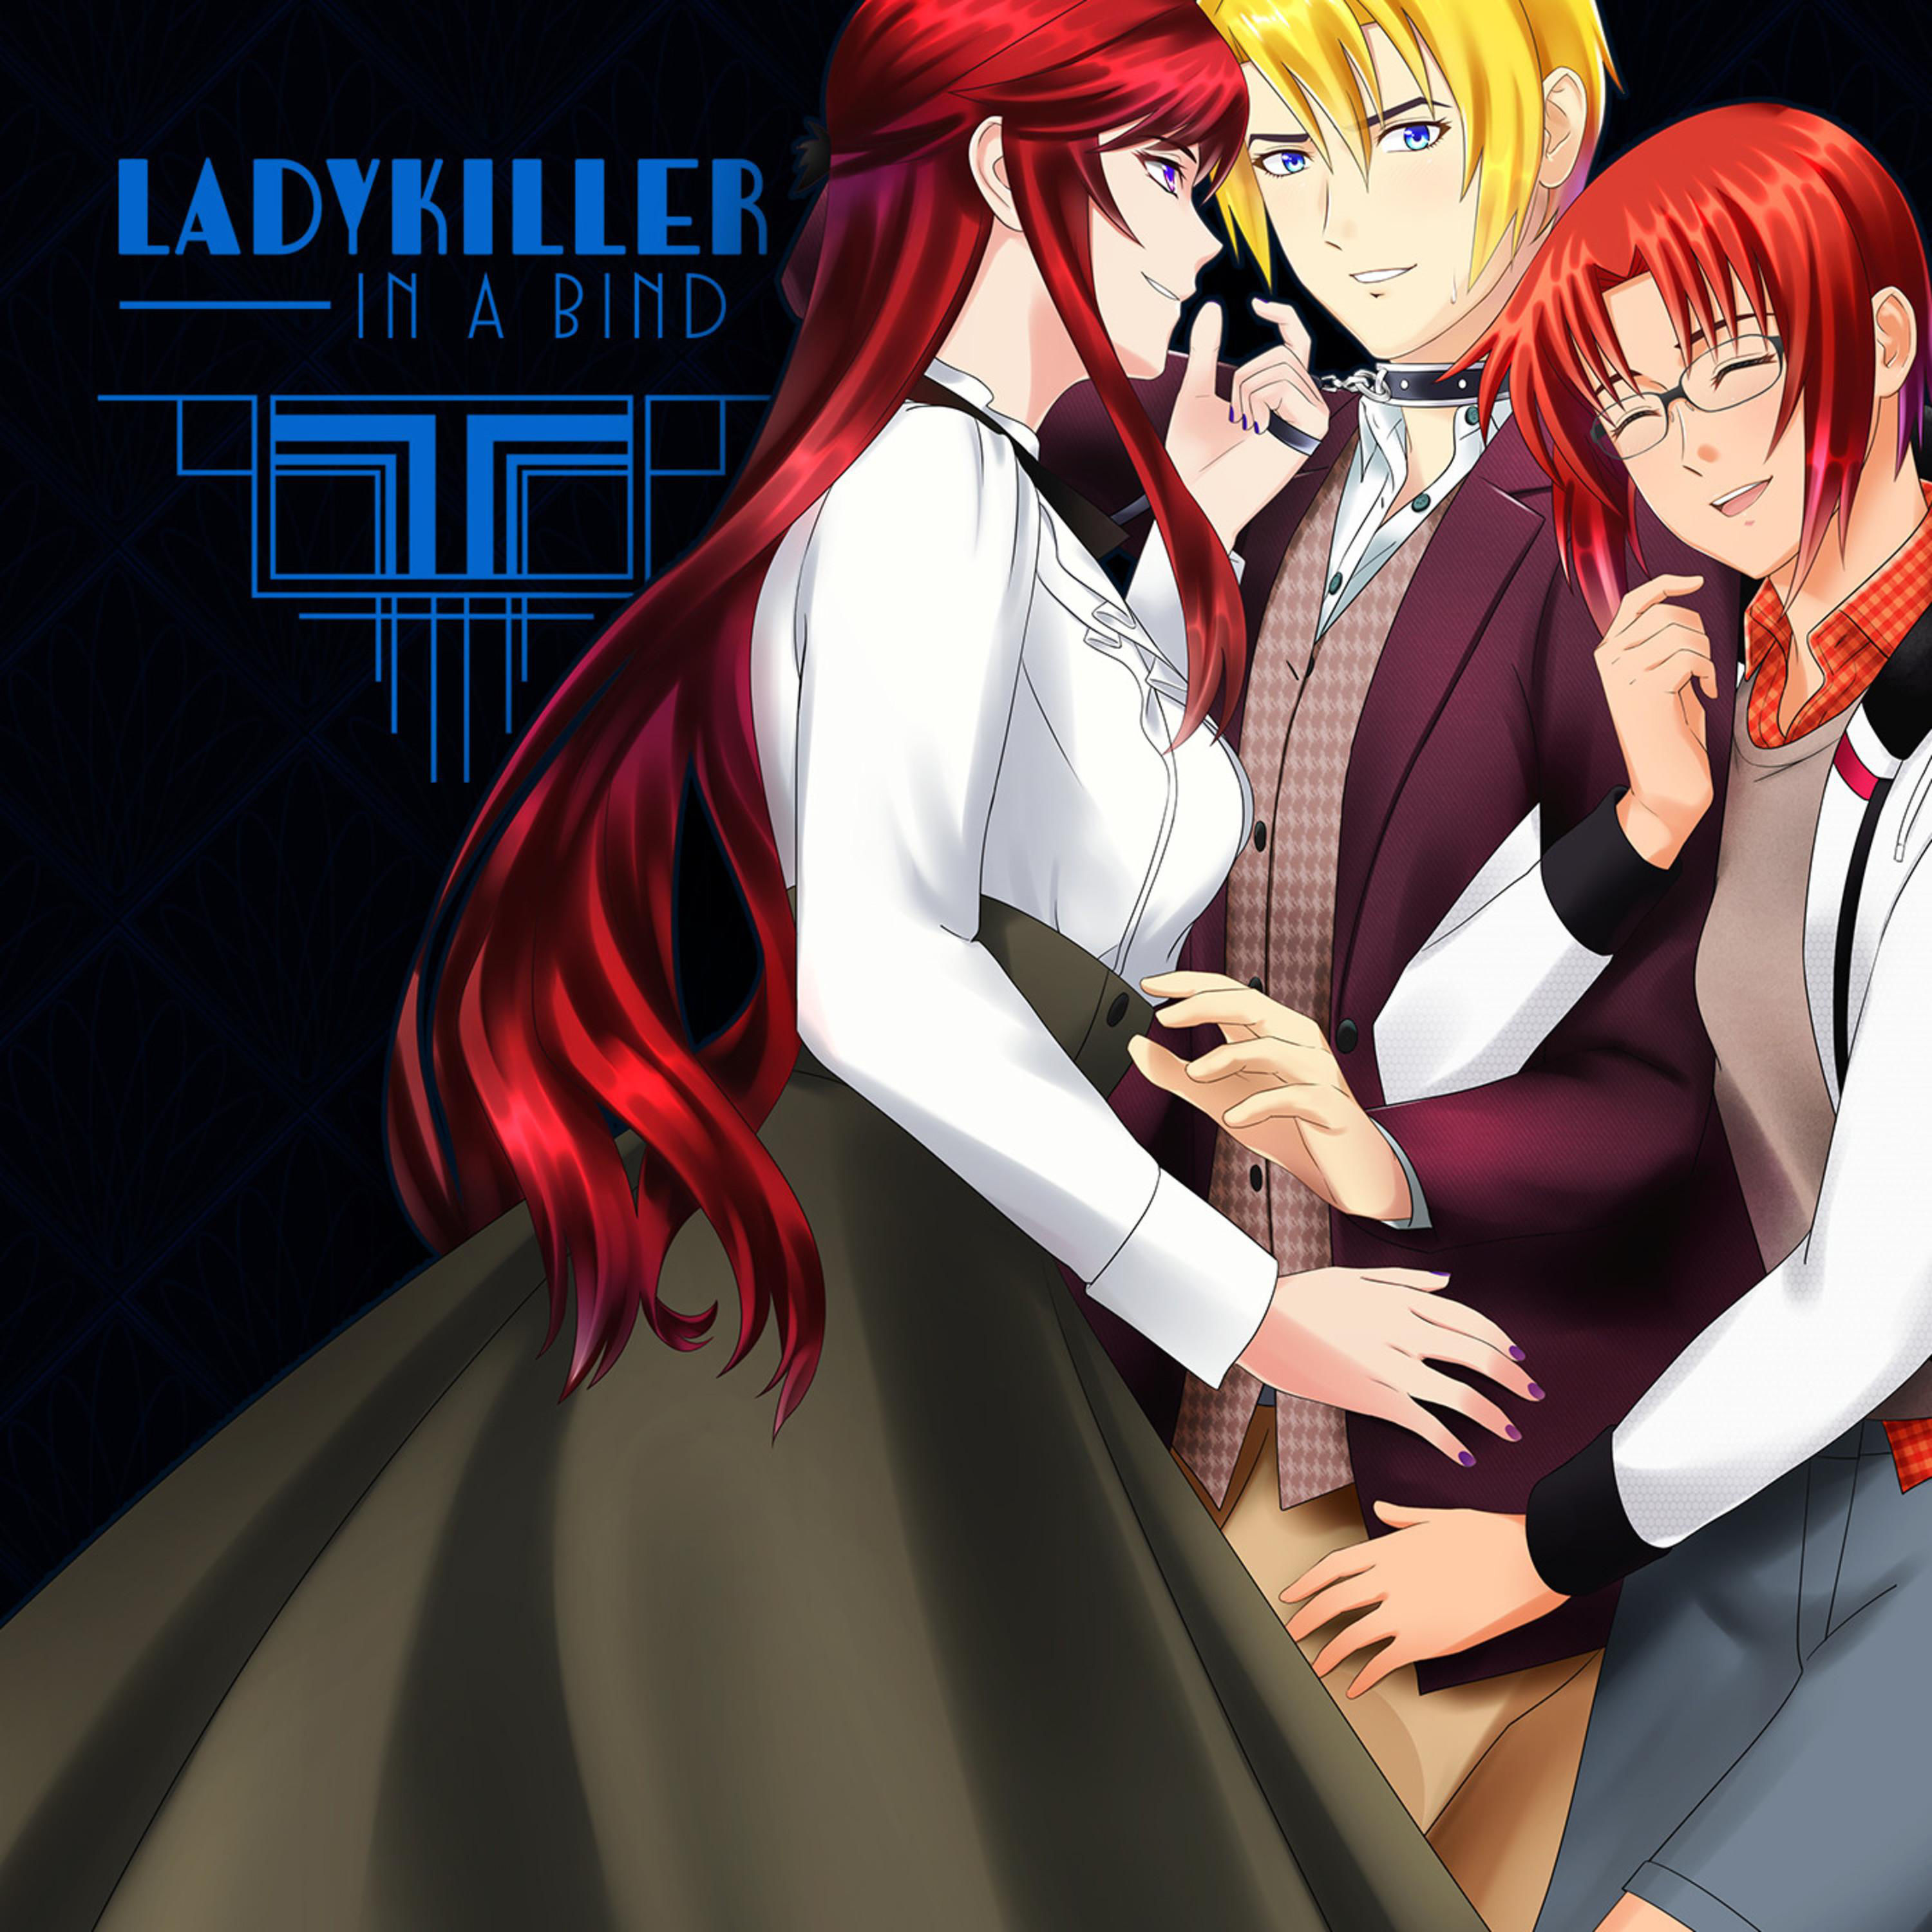 Ladykiller in a bind download